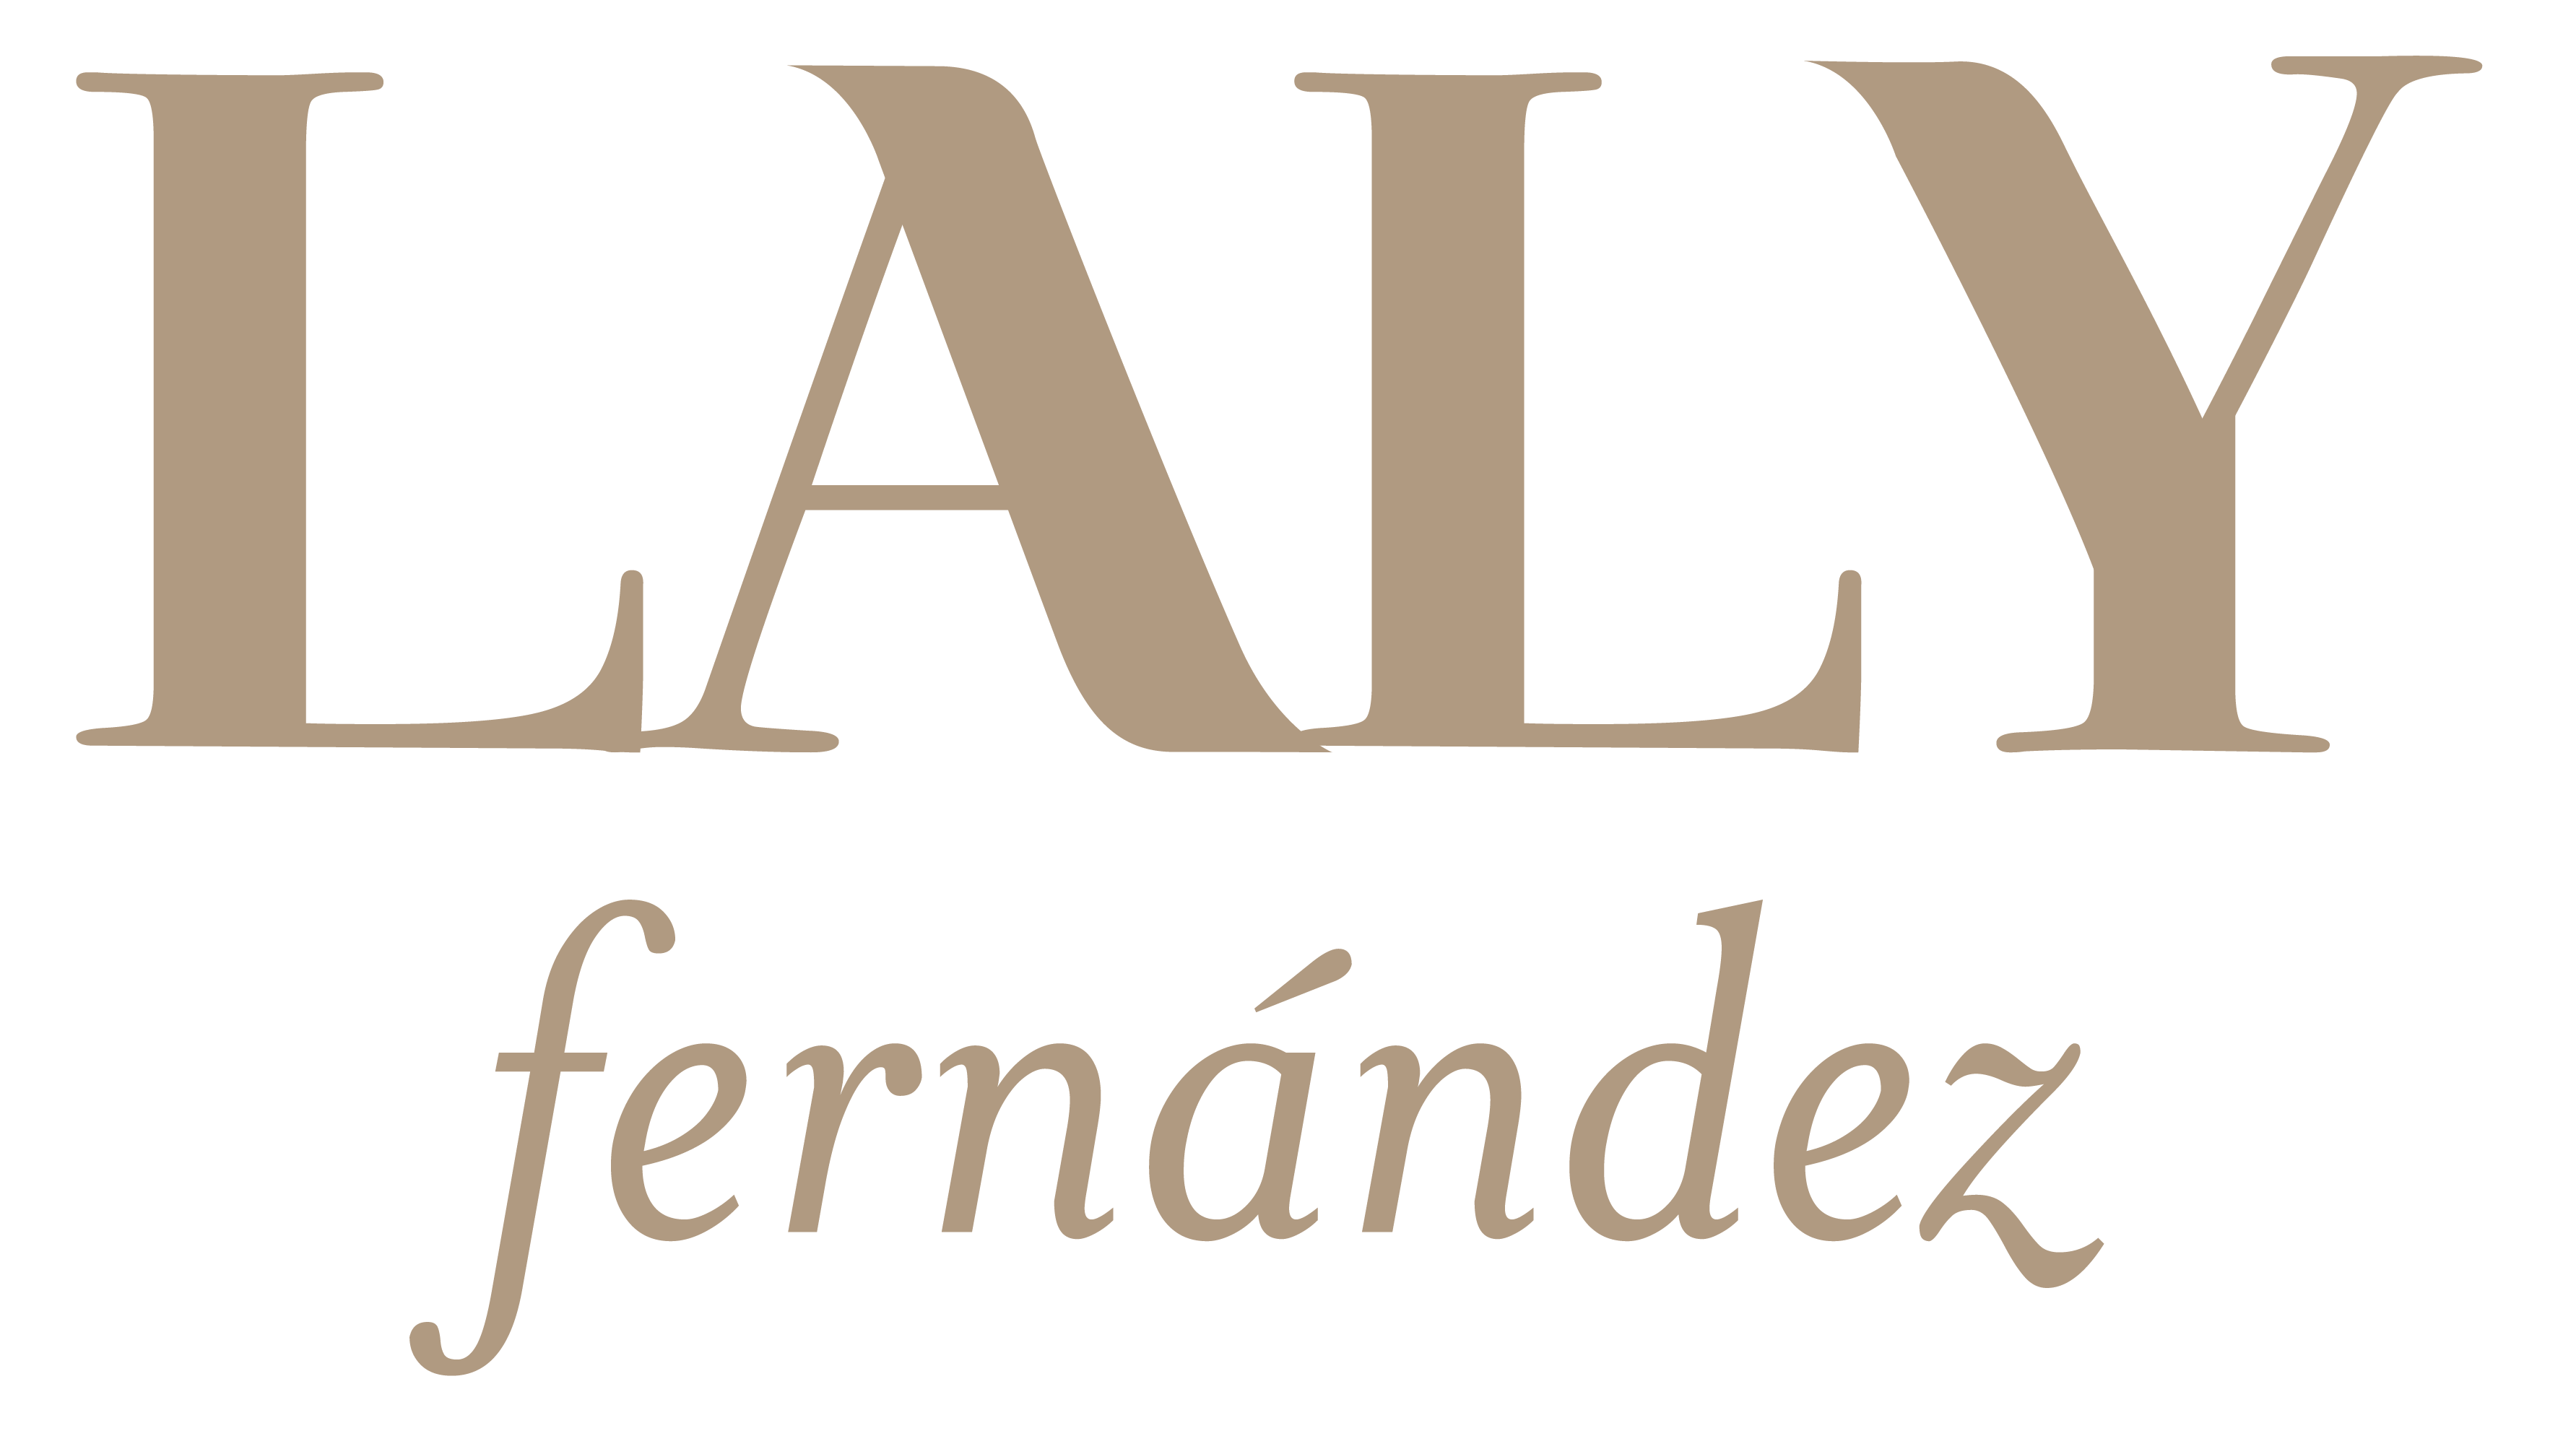 Logos_Laly_2022-15